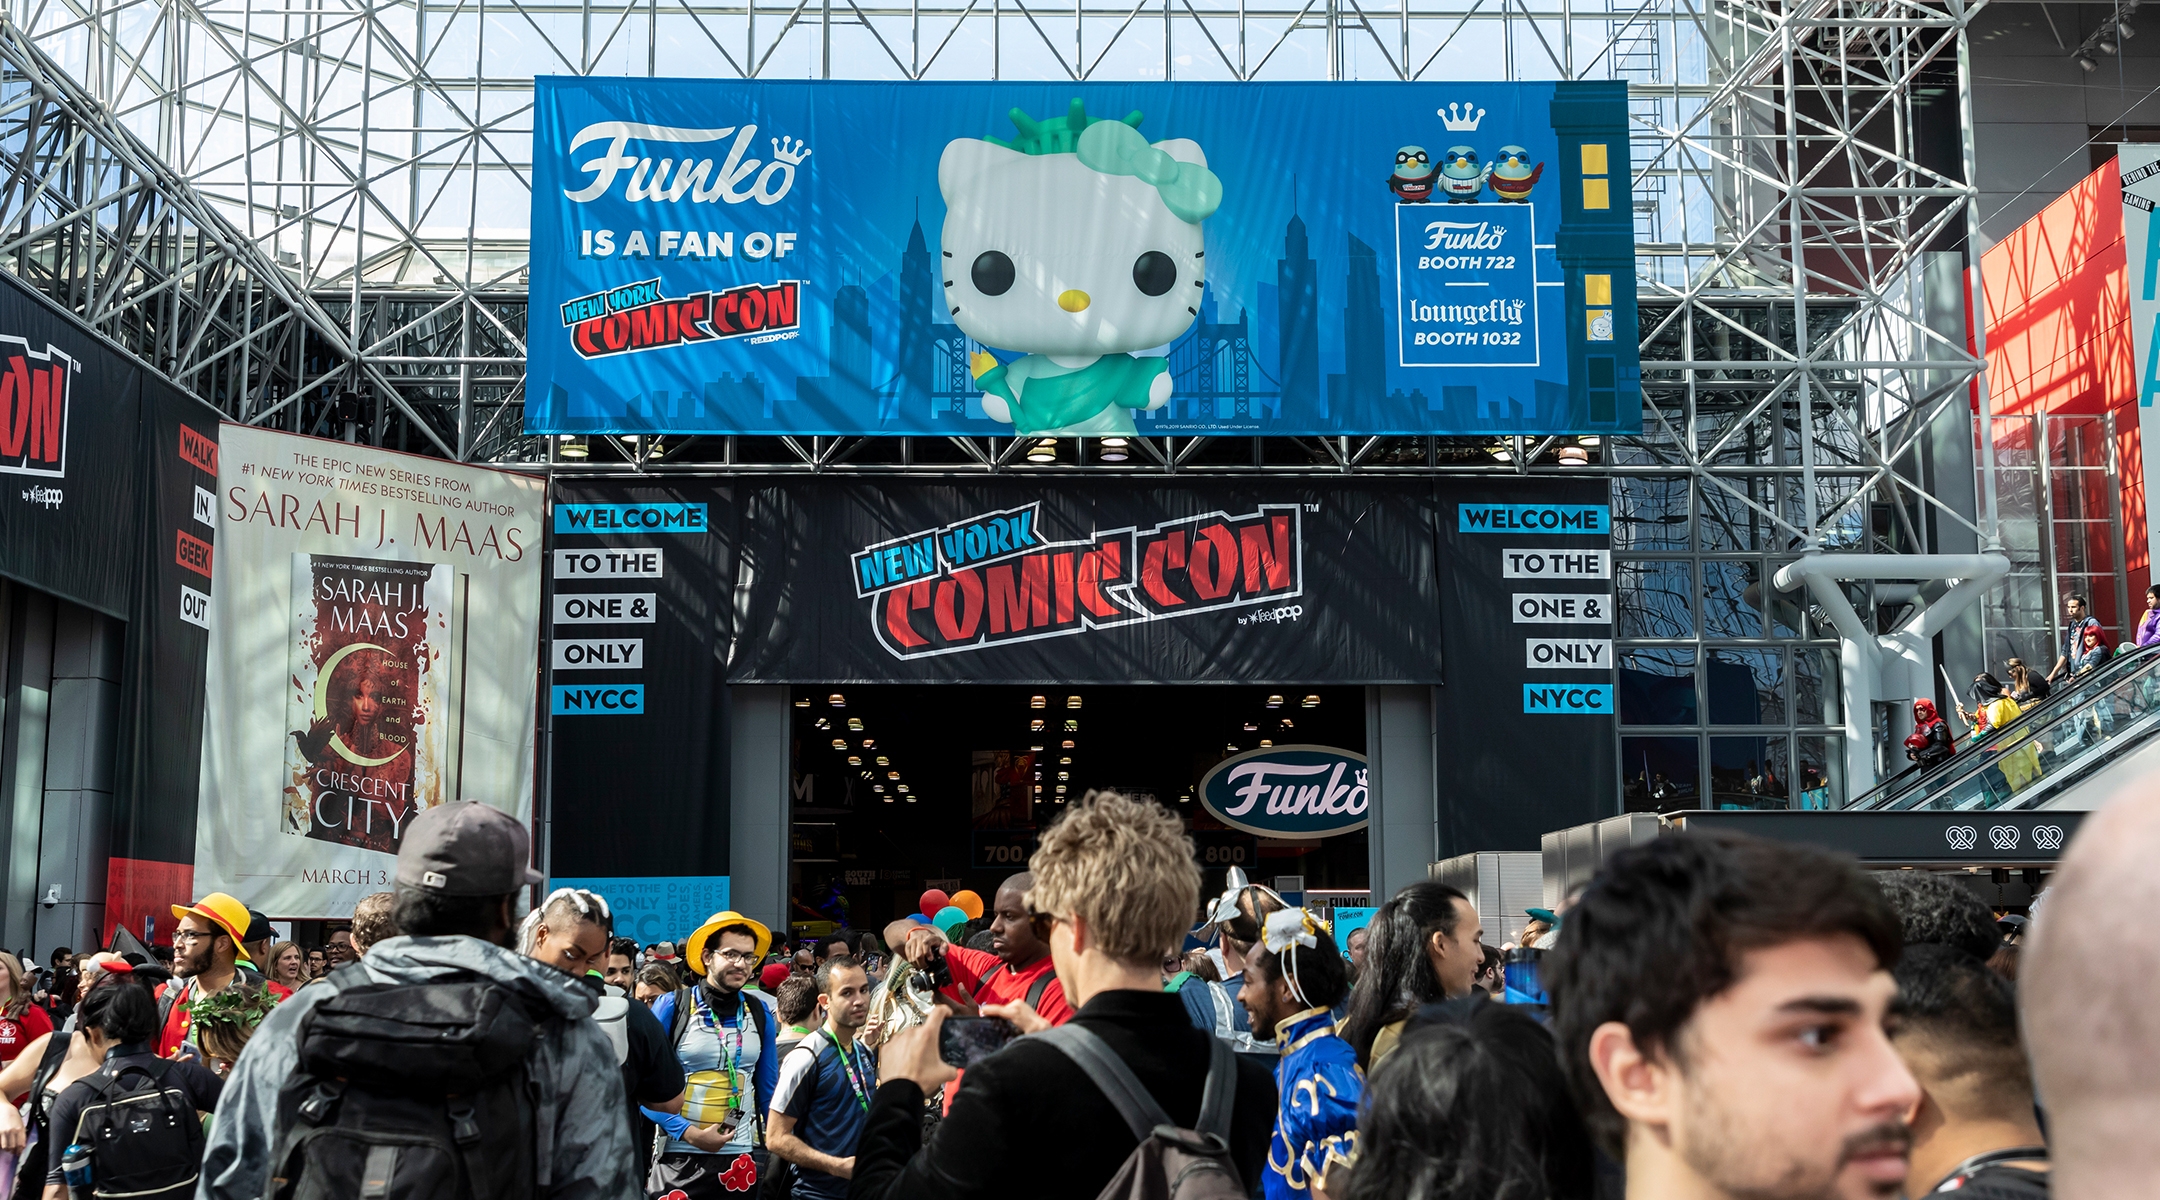 Jewish creators, fans feel snubbed by New York Comic Con